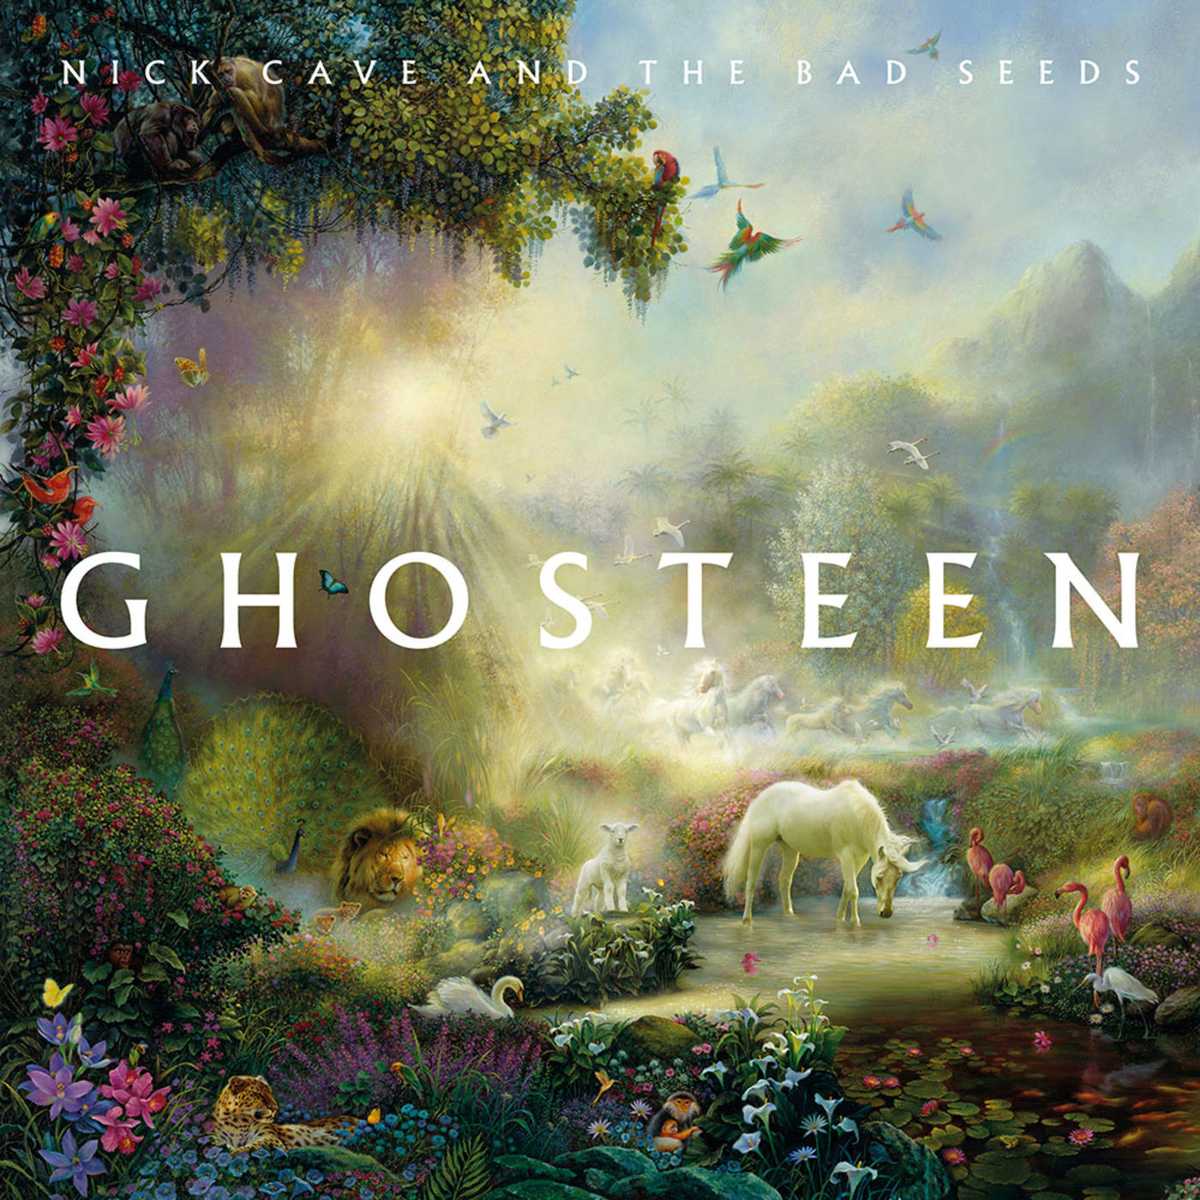 Nick Cave & the Bad Seeds - Ghosteen: Νέος δίσκος την επόμενη εβδομάδα!